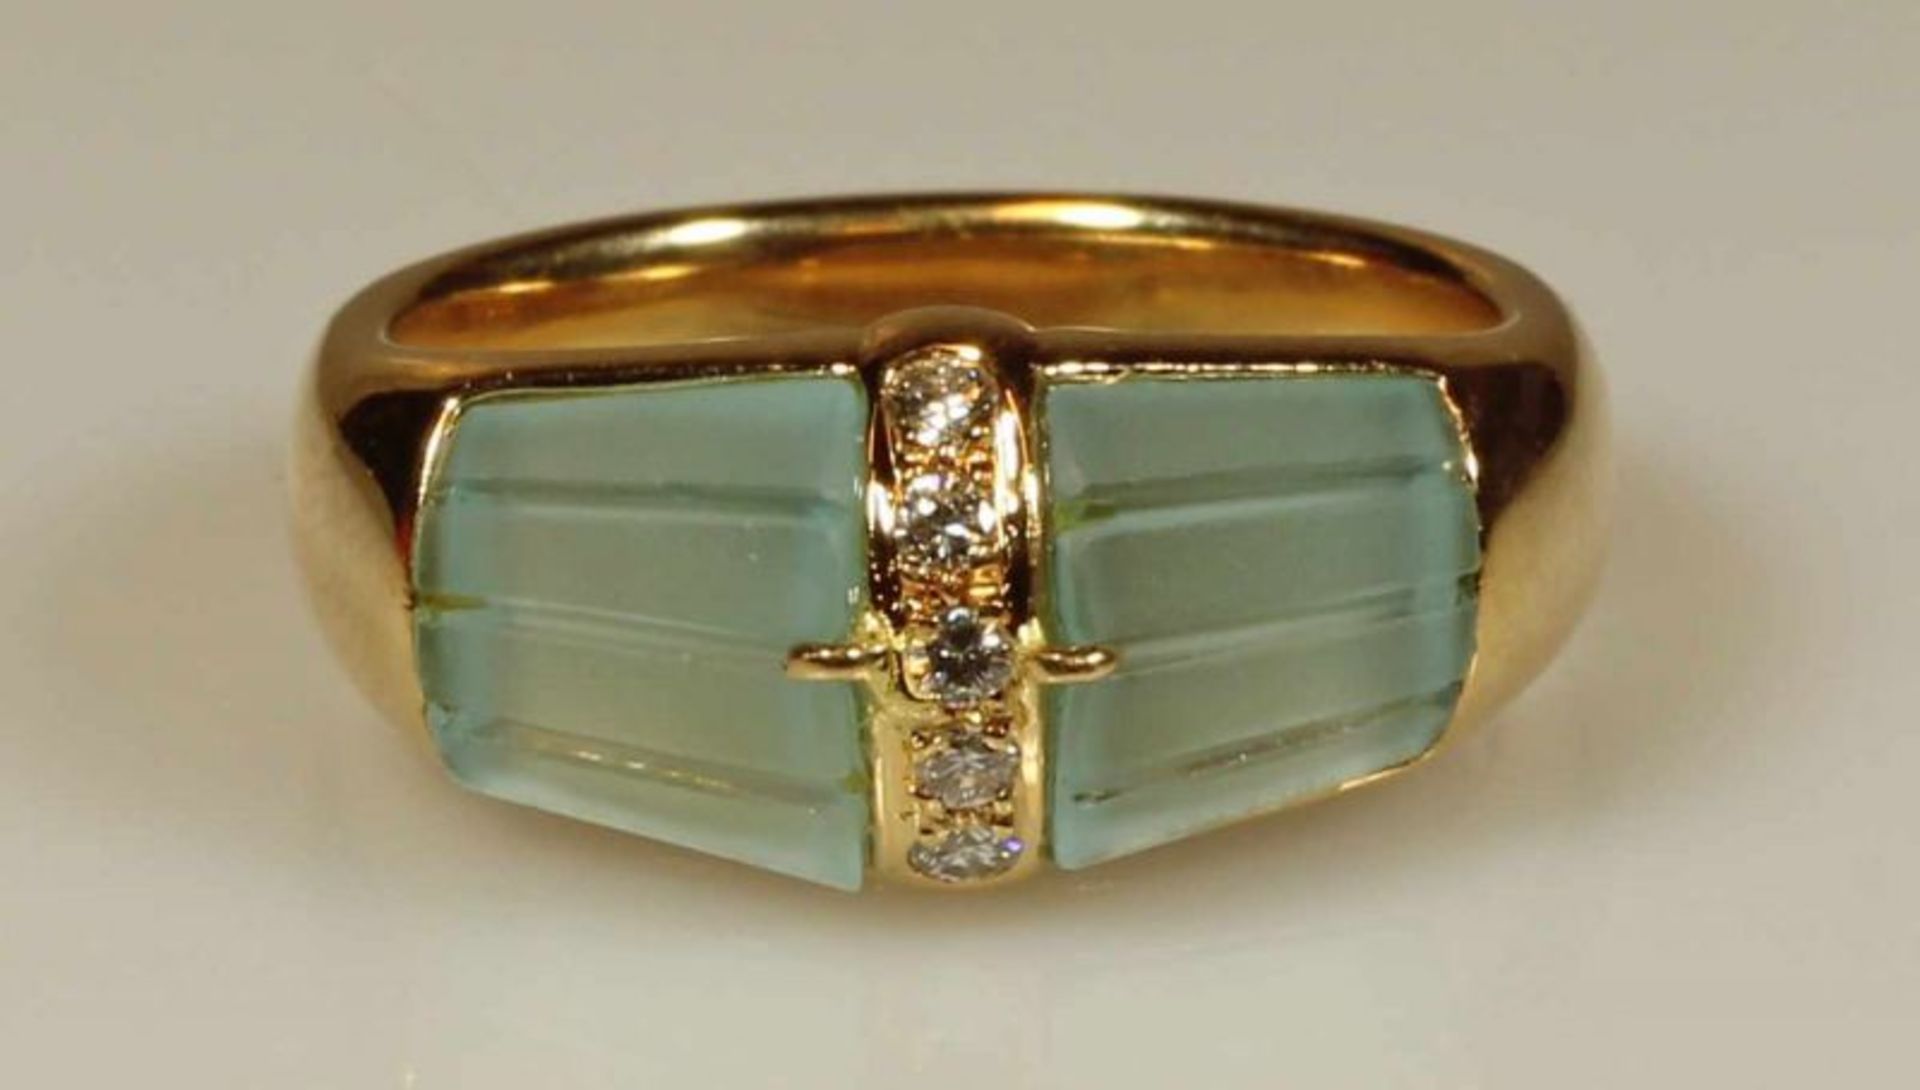 Ring, GG 750 punziert LB (Lüth Bijoux), 5 Brillanten zus. ca. 0.07 ct., etwa fw-w/lpr-vvs, 10.1 g,